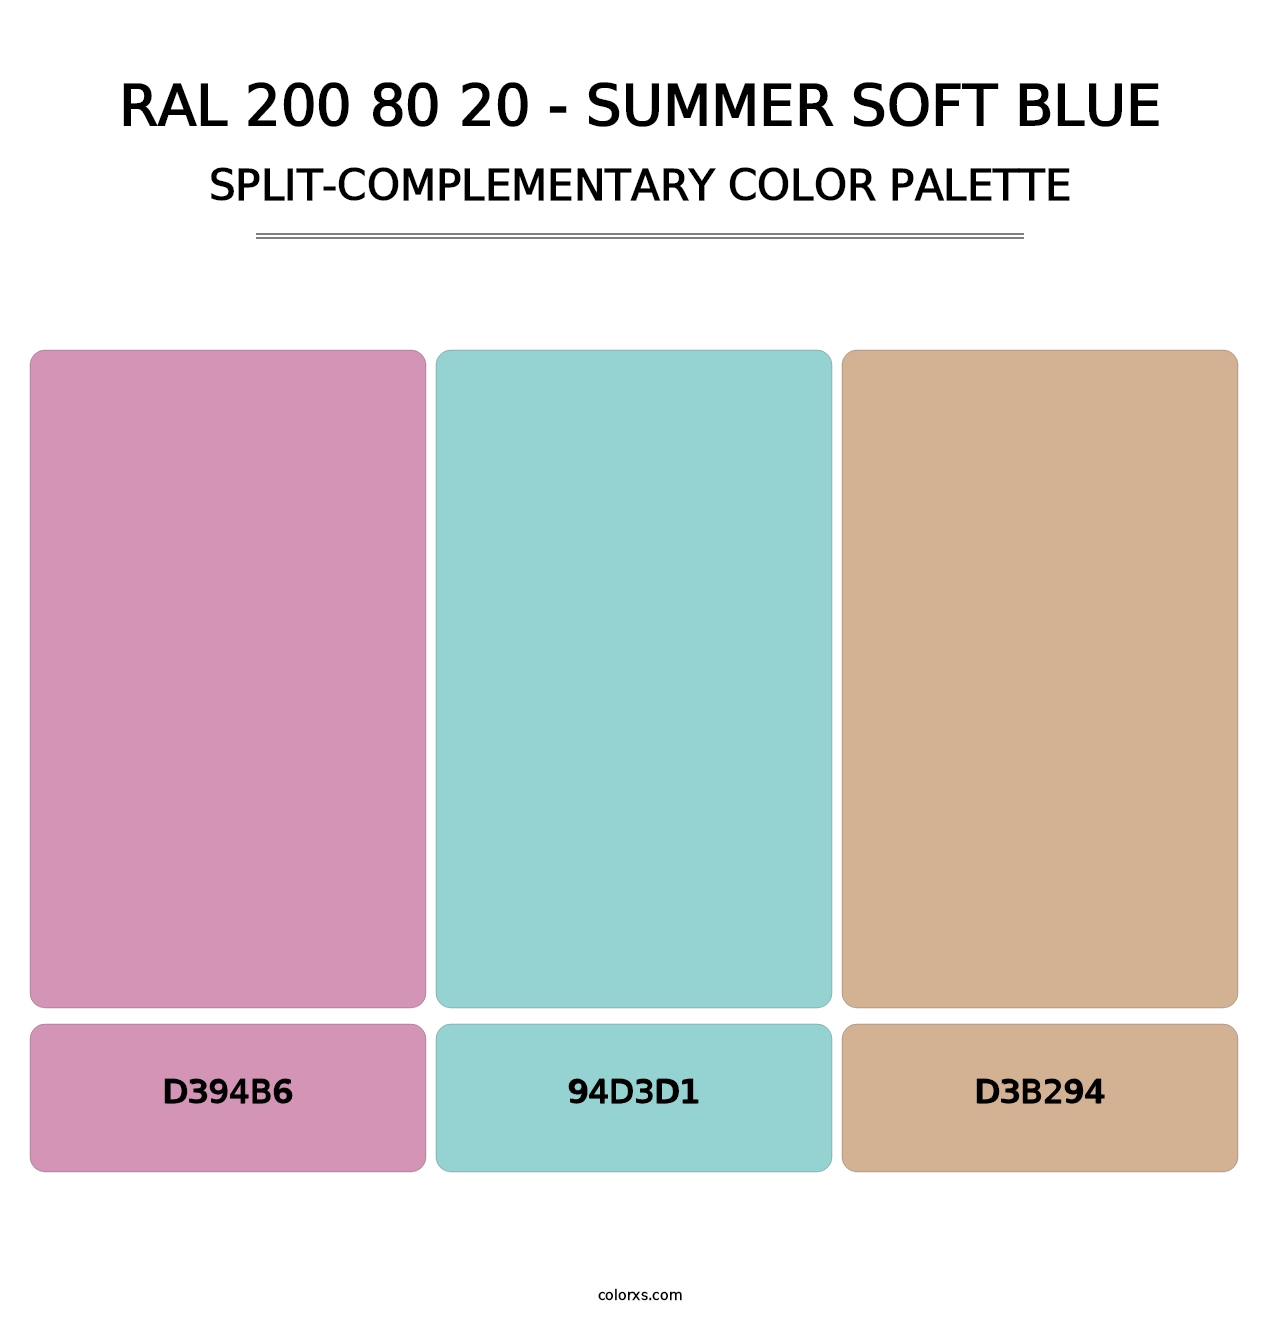 RAL 200 80 20 - Summer Soft Blue - Split-Complementary Color Palette